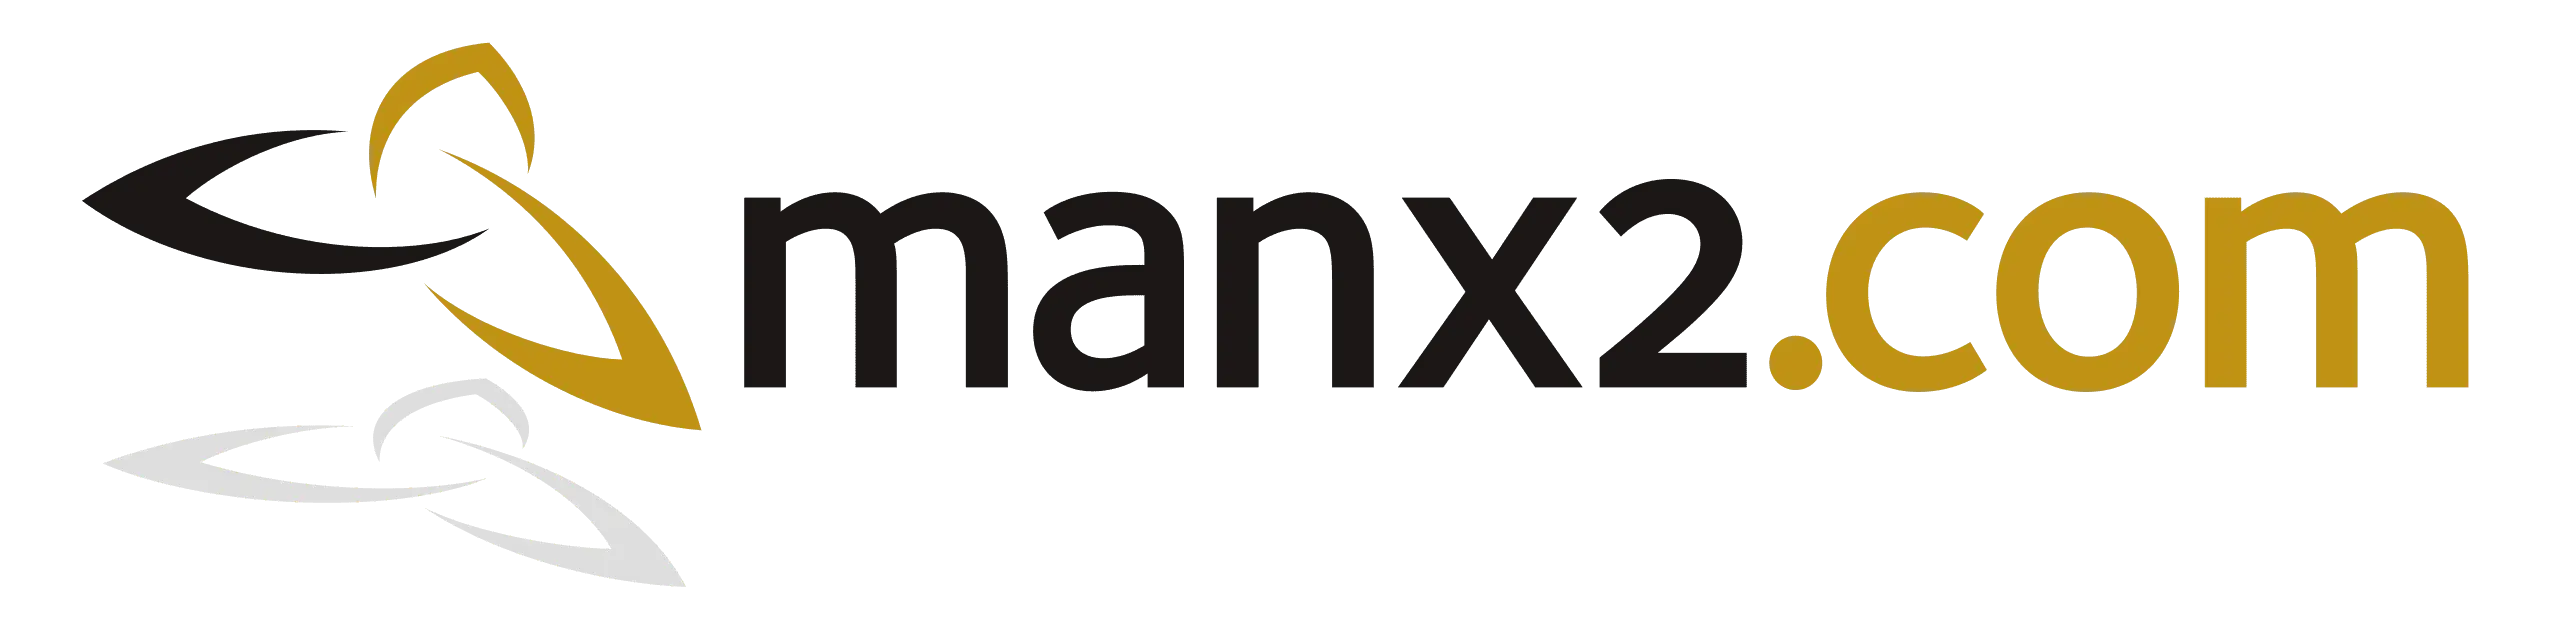 Manx2